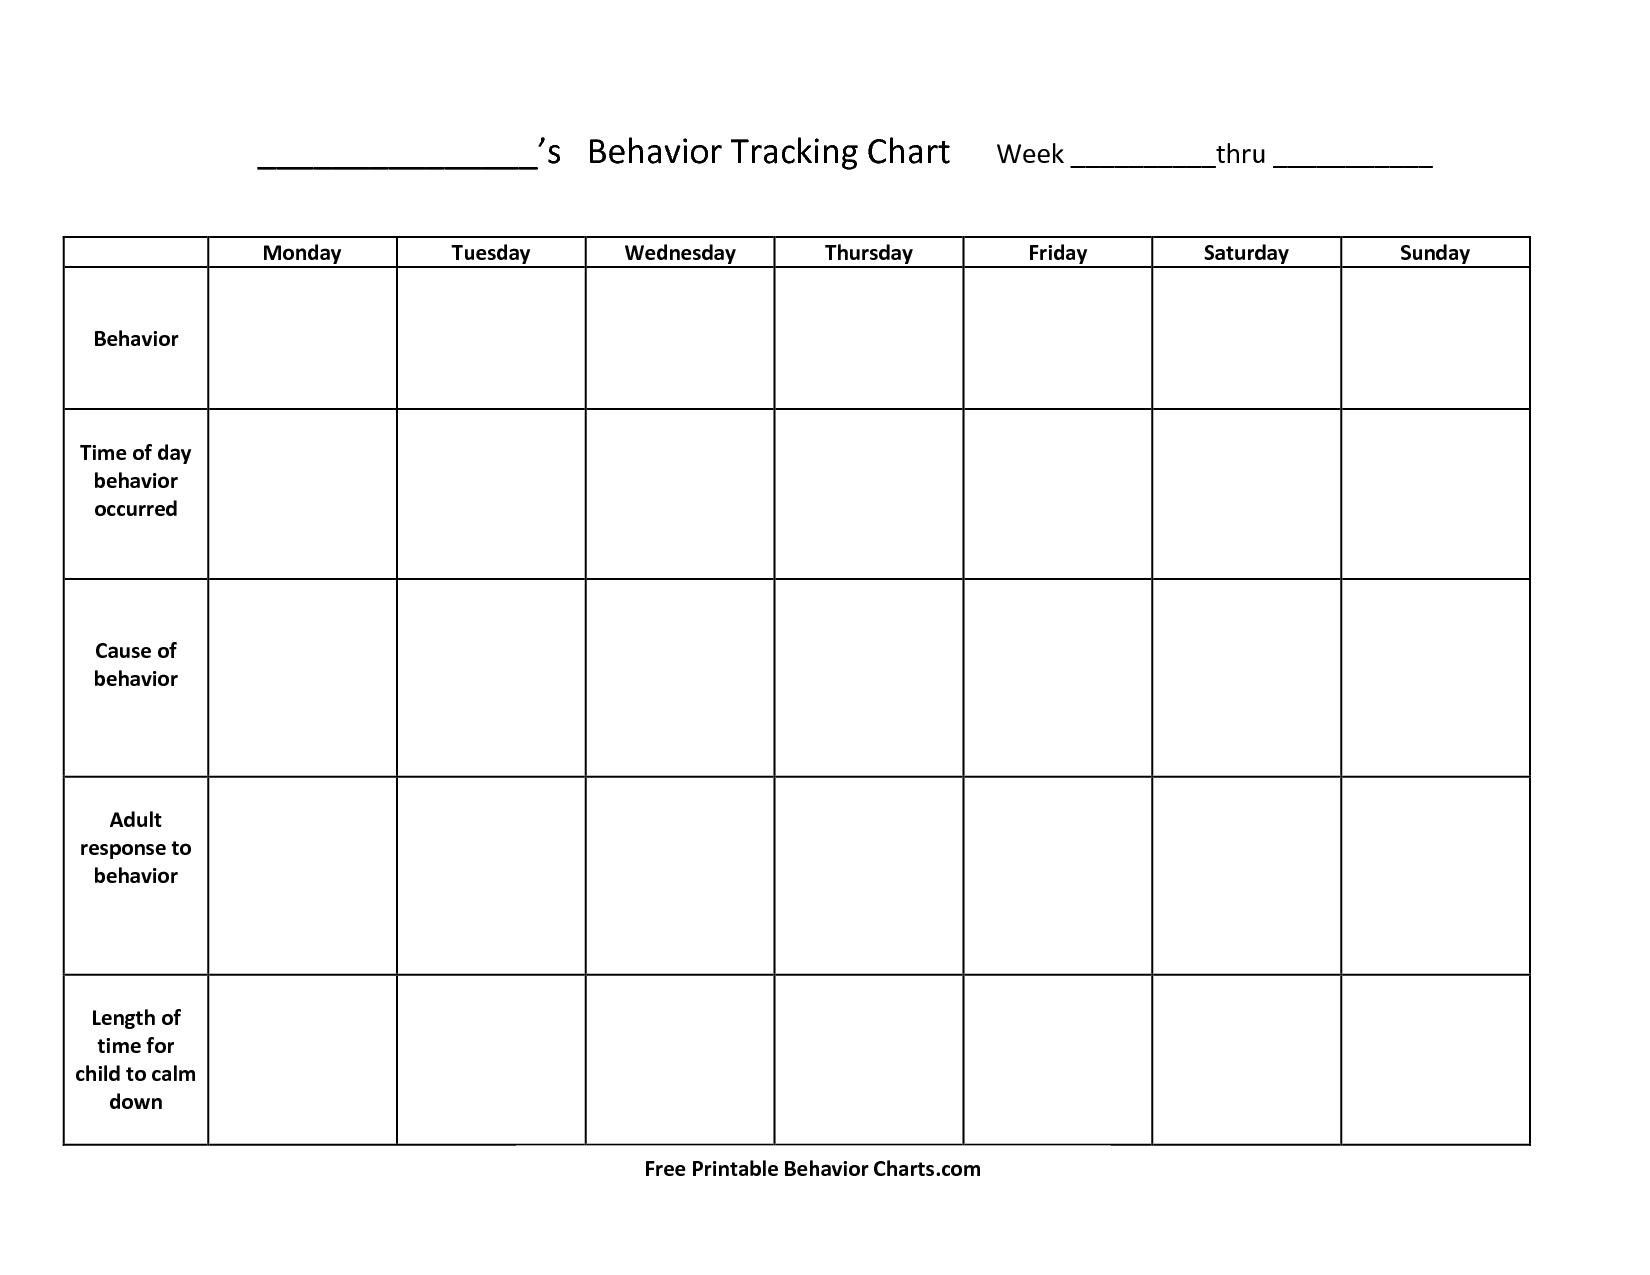 Free+Printable+Behavior+Charts+For+Teachers | Free Printable Exceptional Editable Behavior Chart With Calendar Free